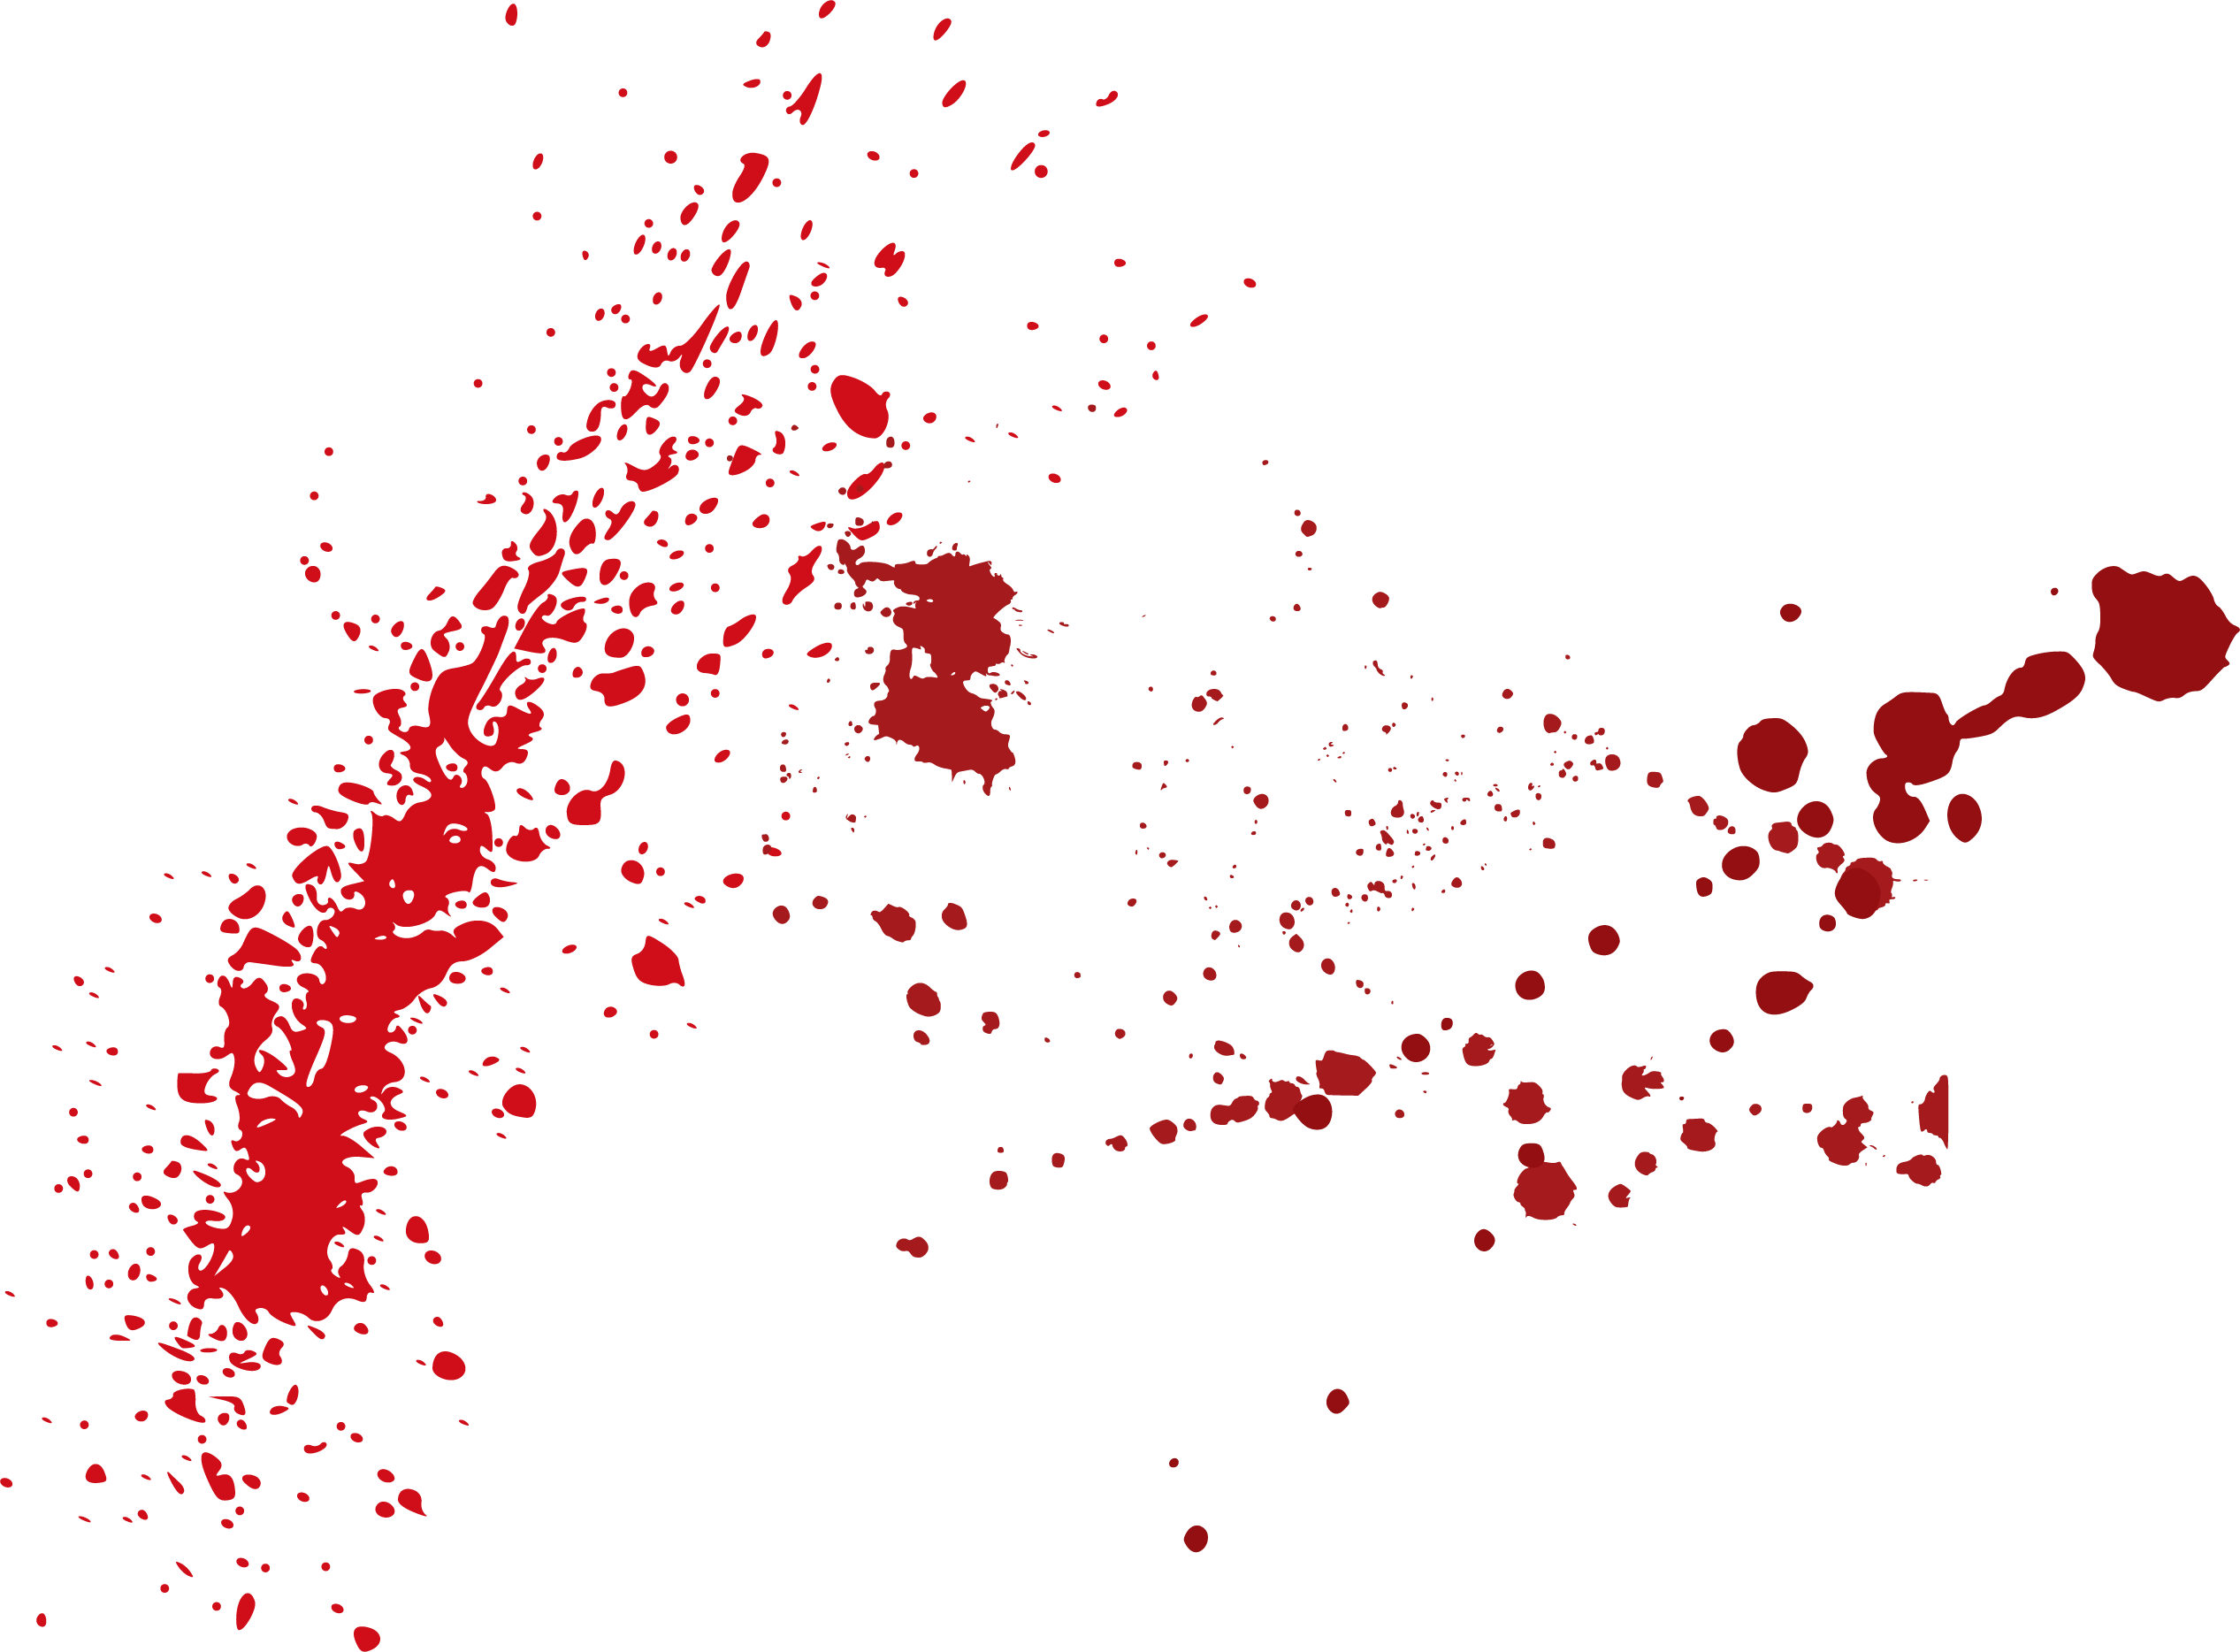 blood splatter after effects free download